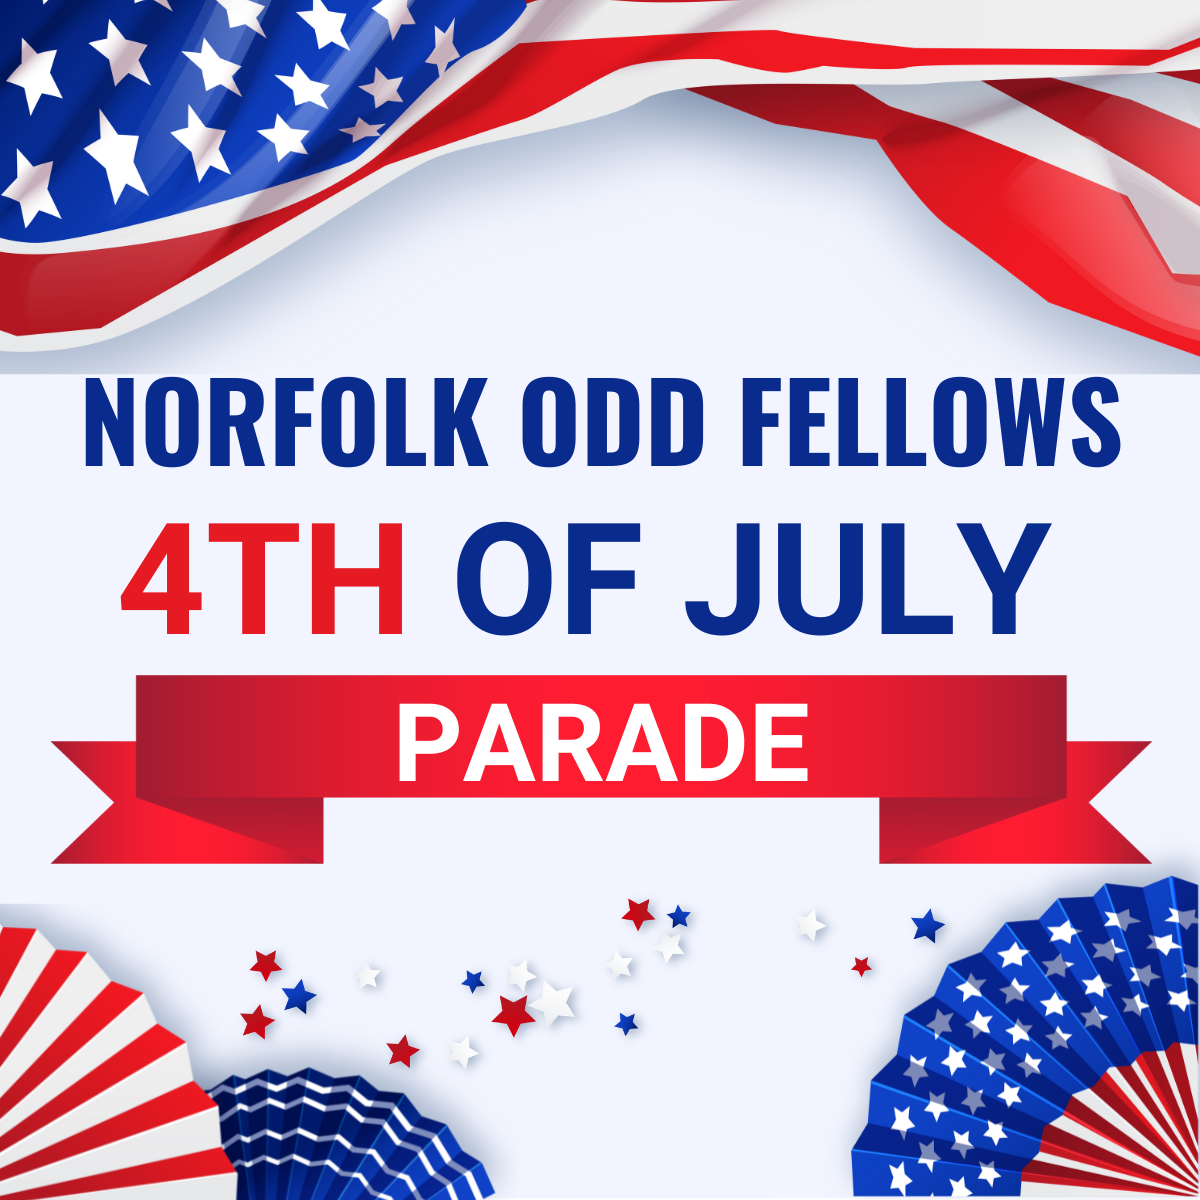 Norfolk Odd Fellows 4th of July Parade